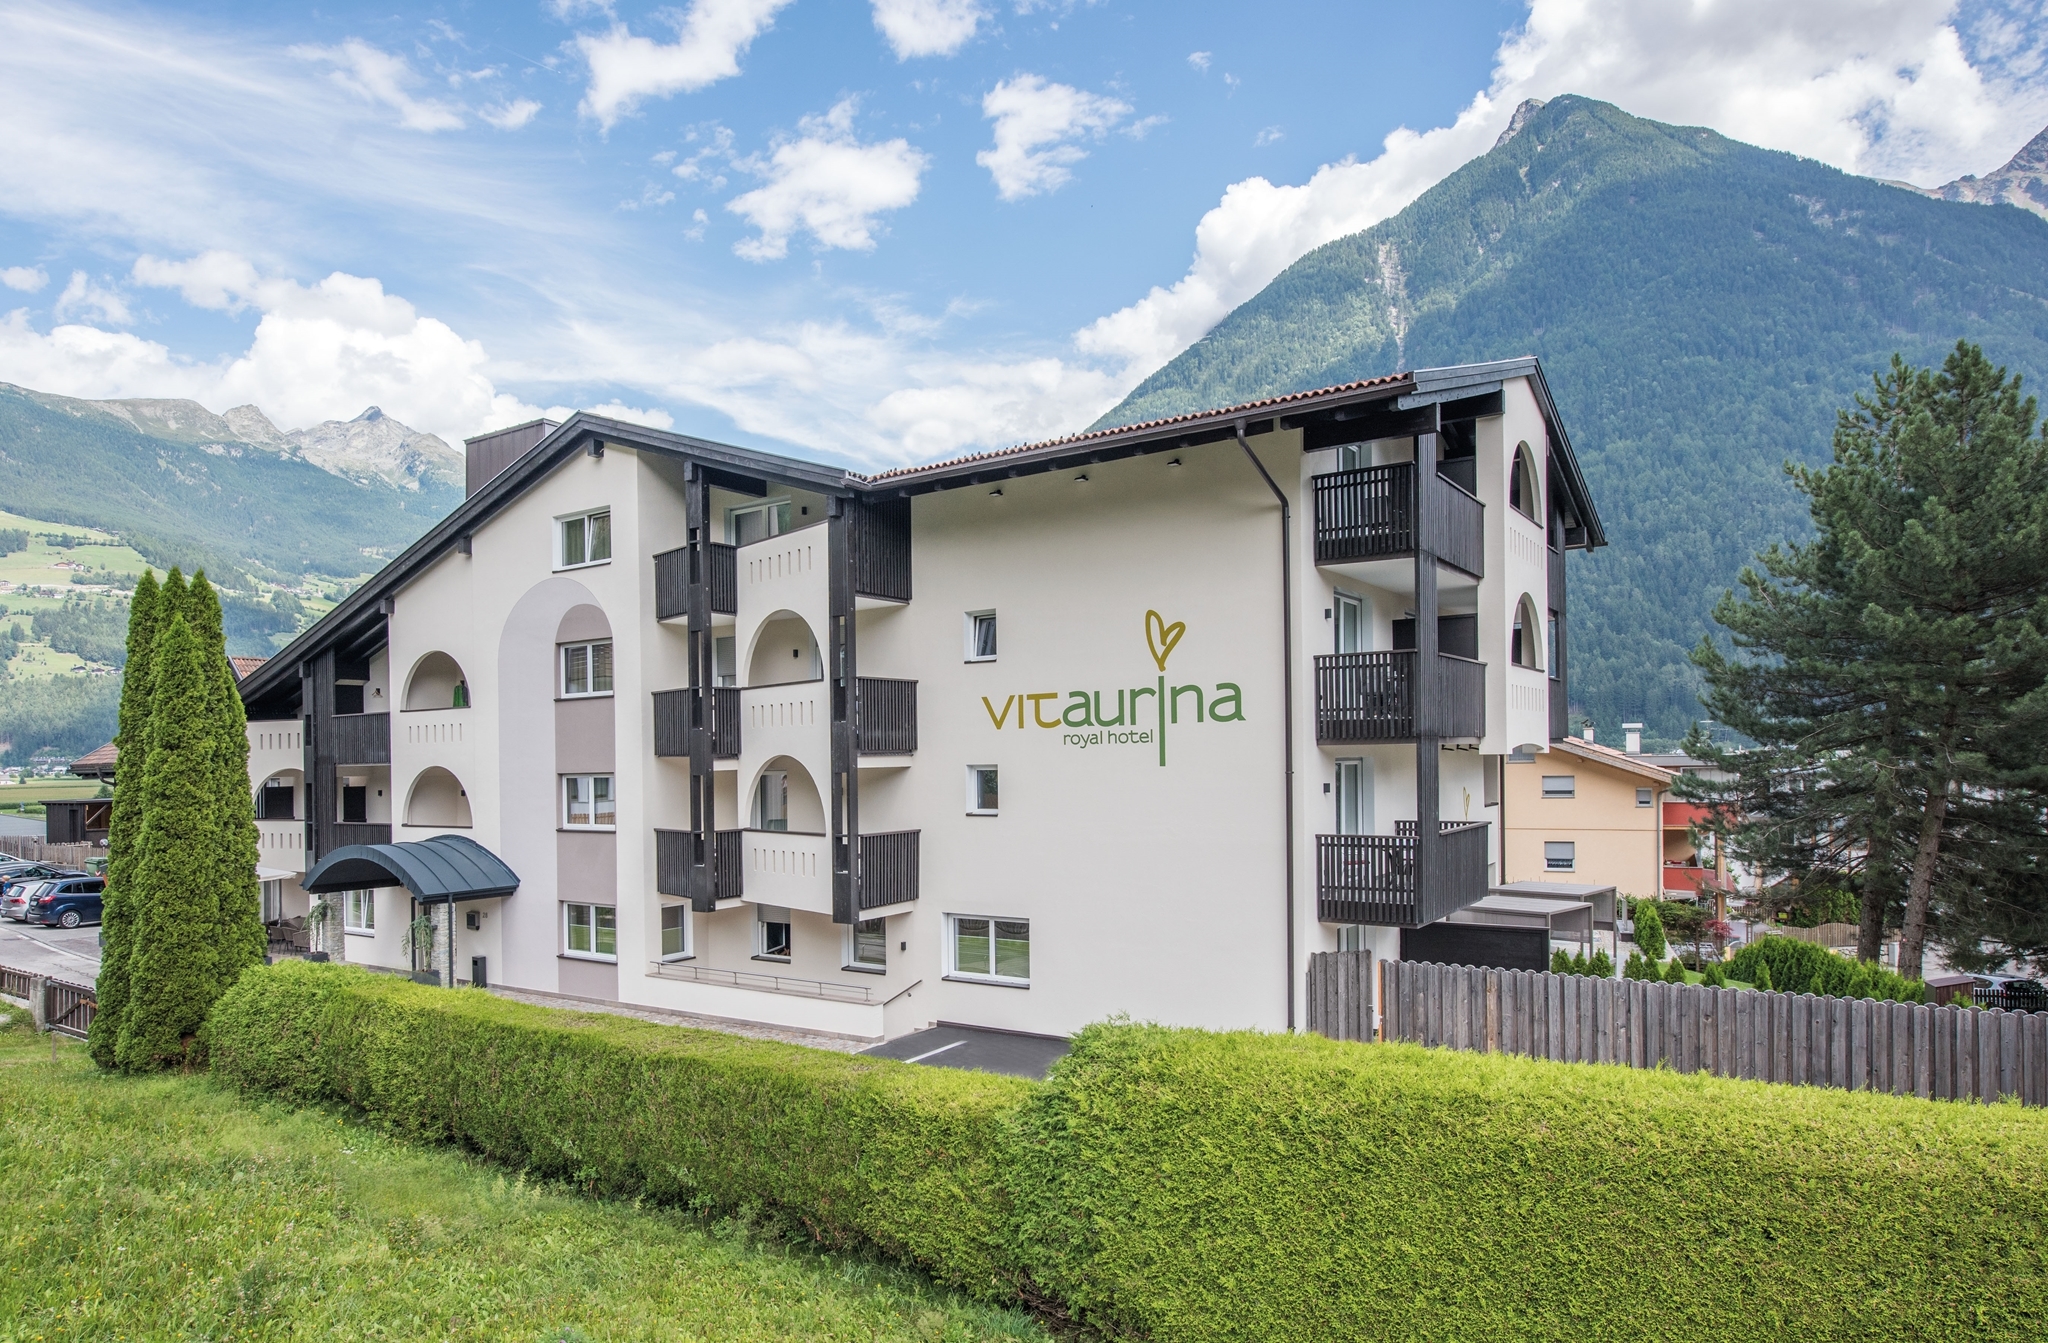 Vitaurina Royal Hotel - Mühlen in Taufers in Tauferer Ahrntal